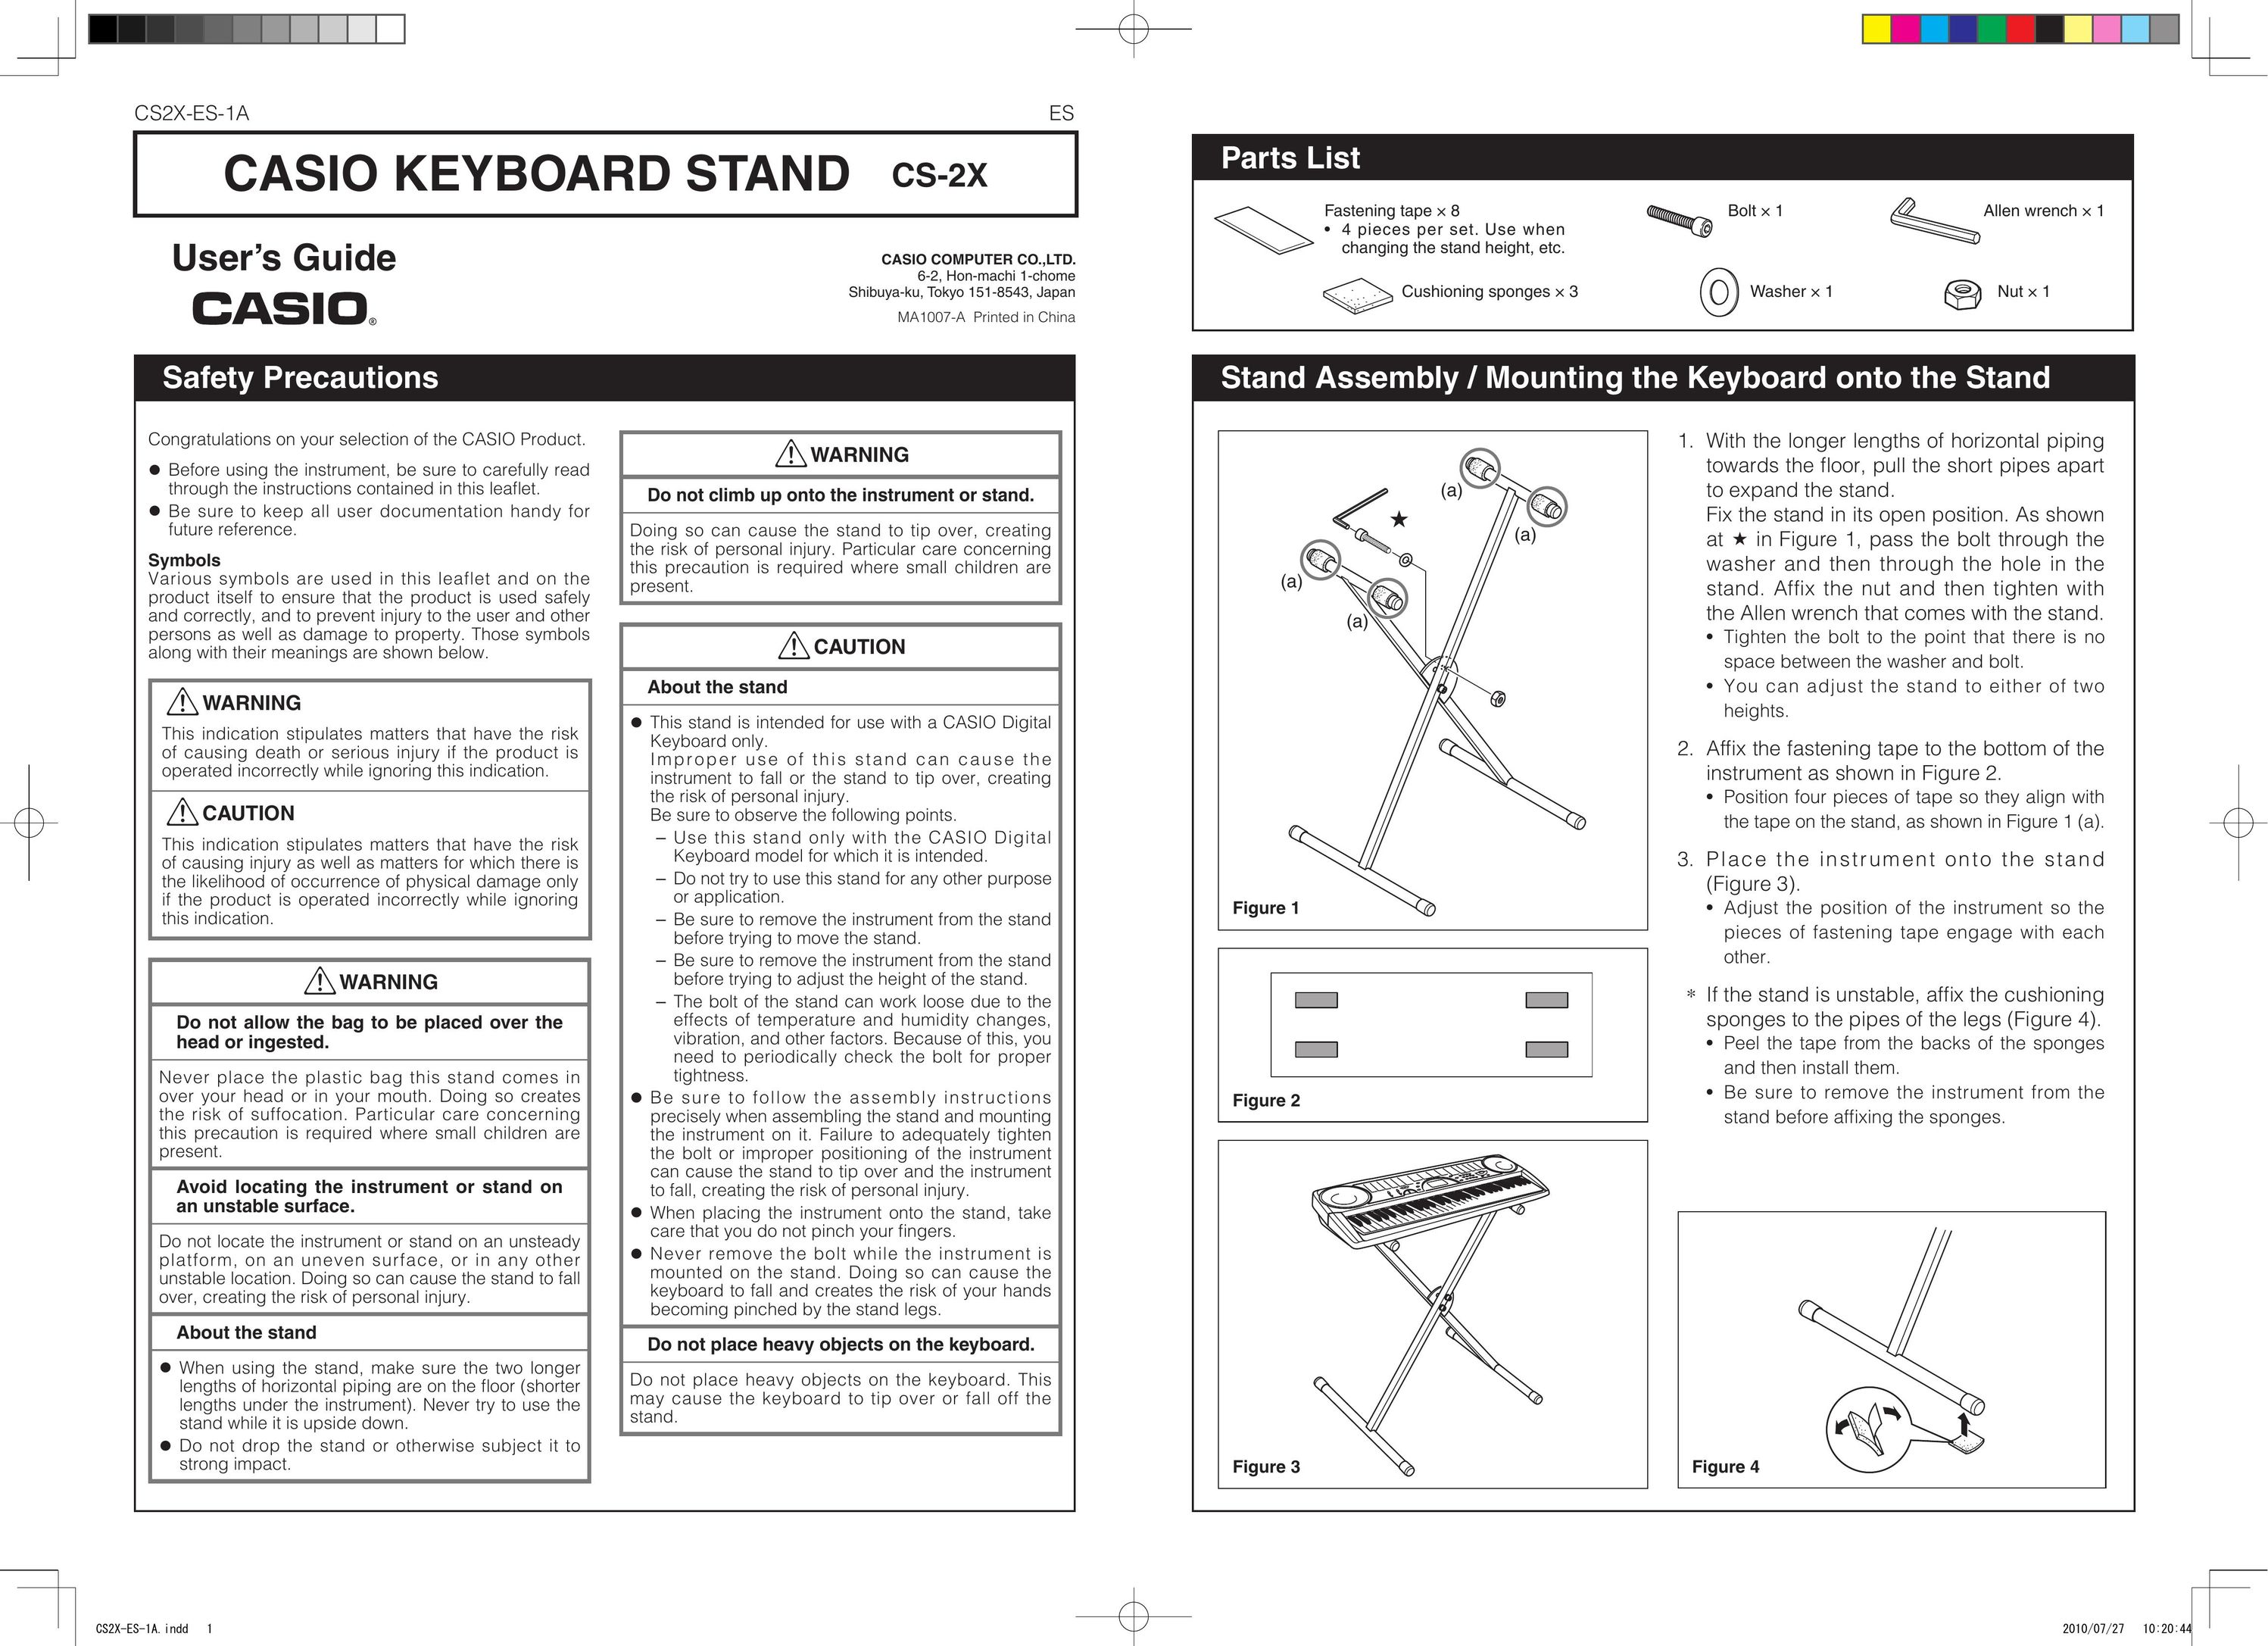 Casio CS-2X Video Game Keyboard User Manual